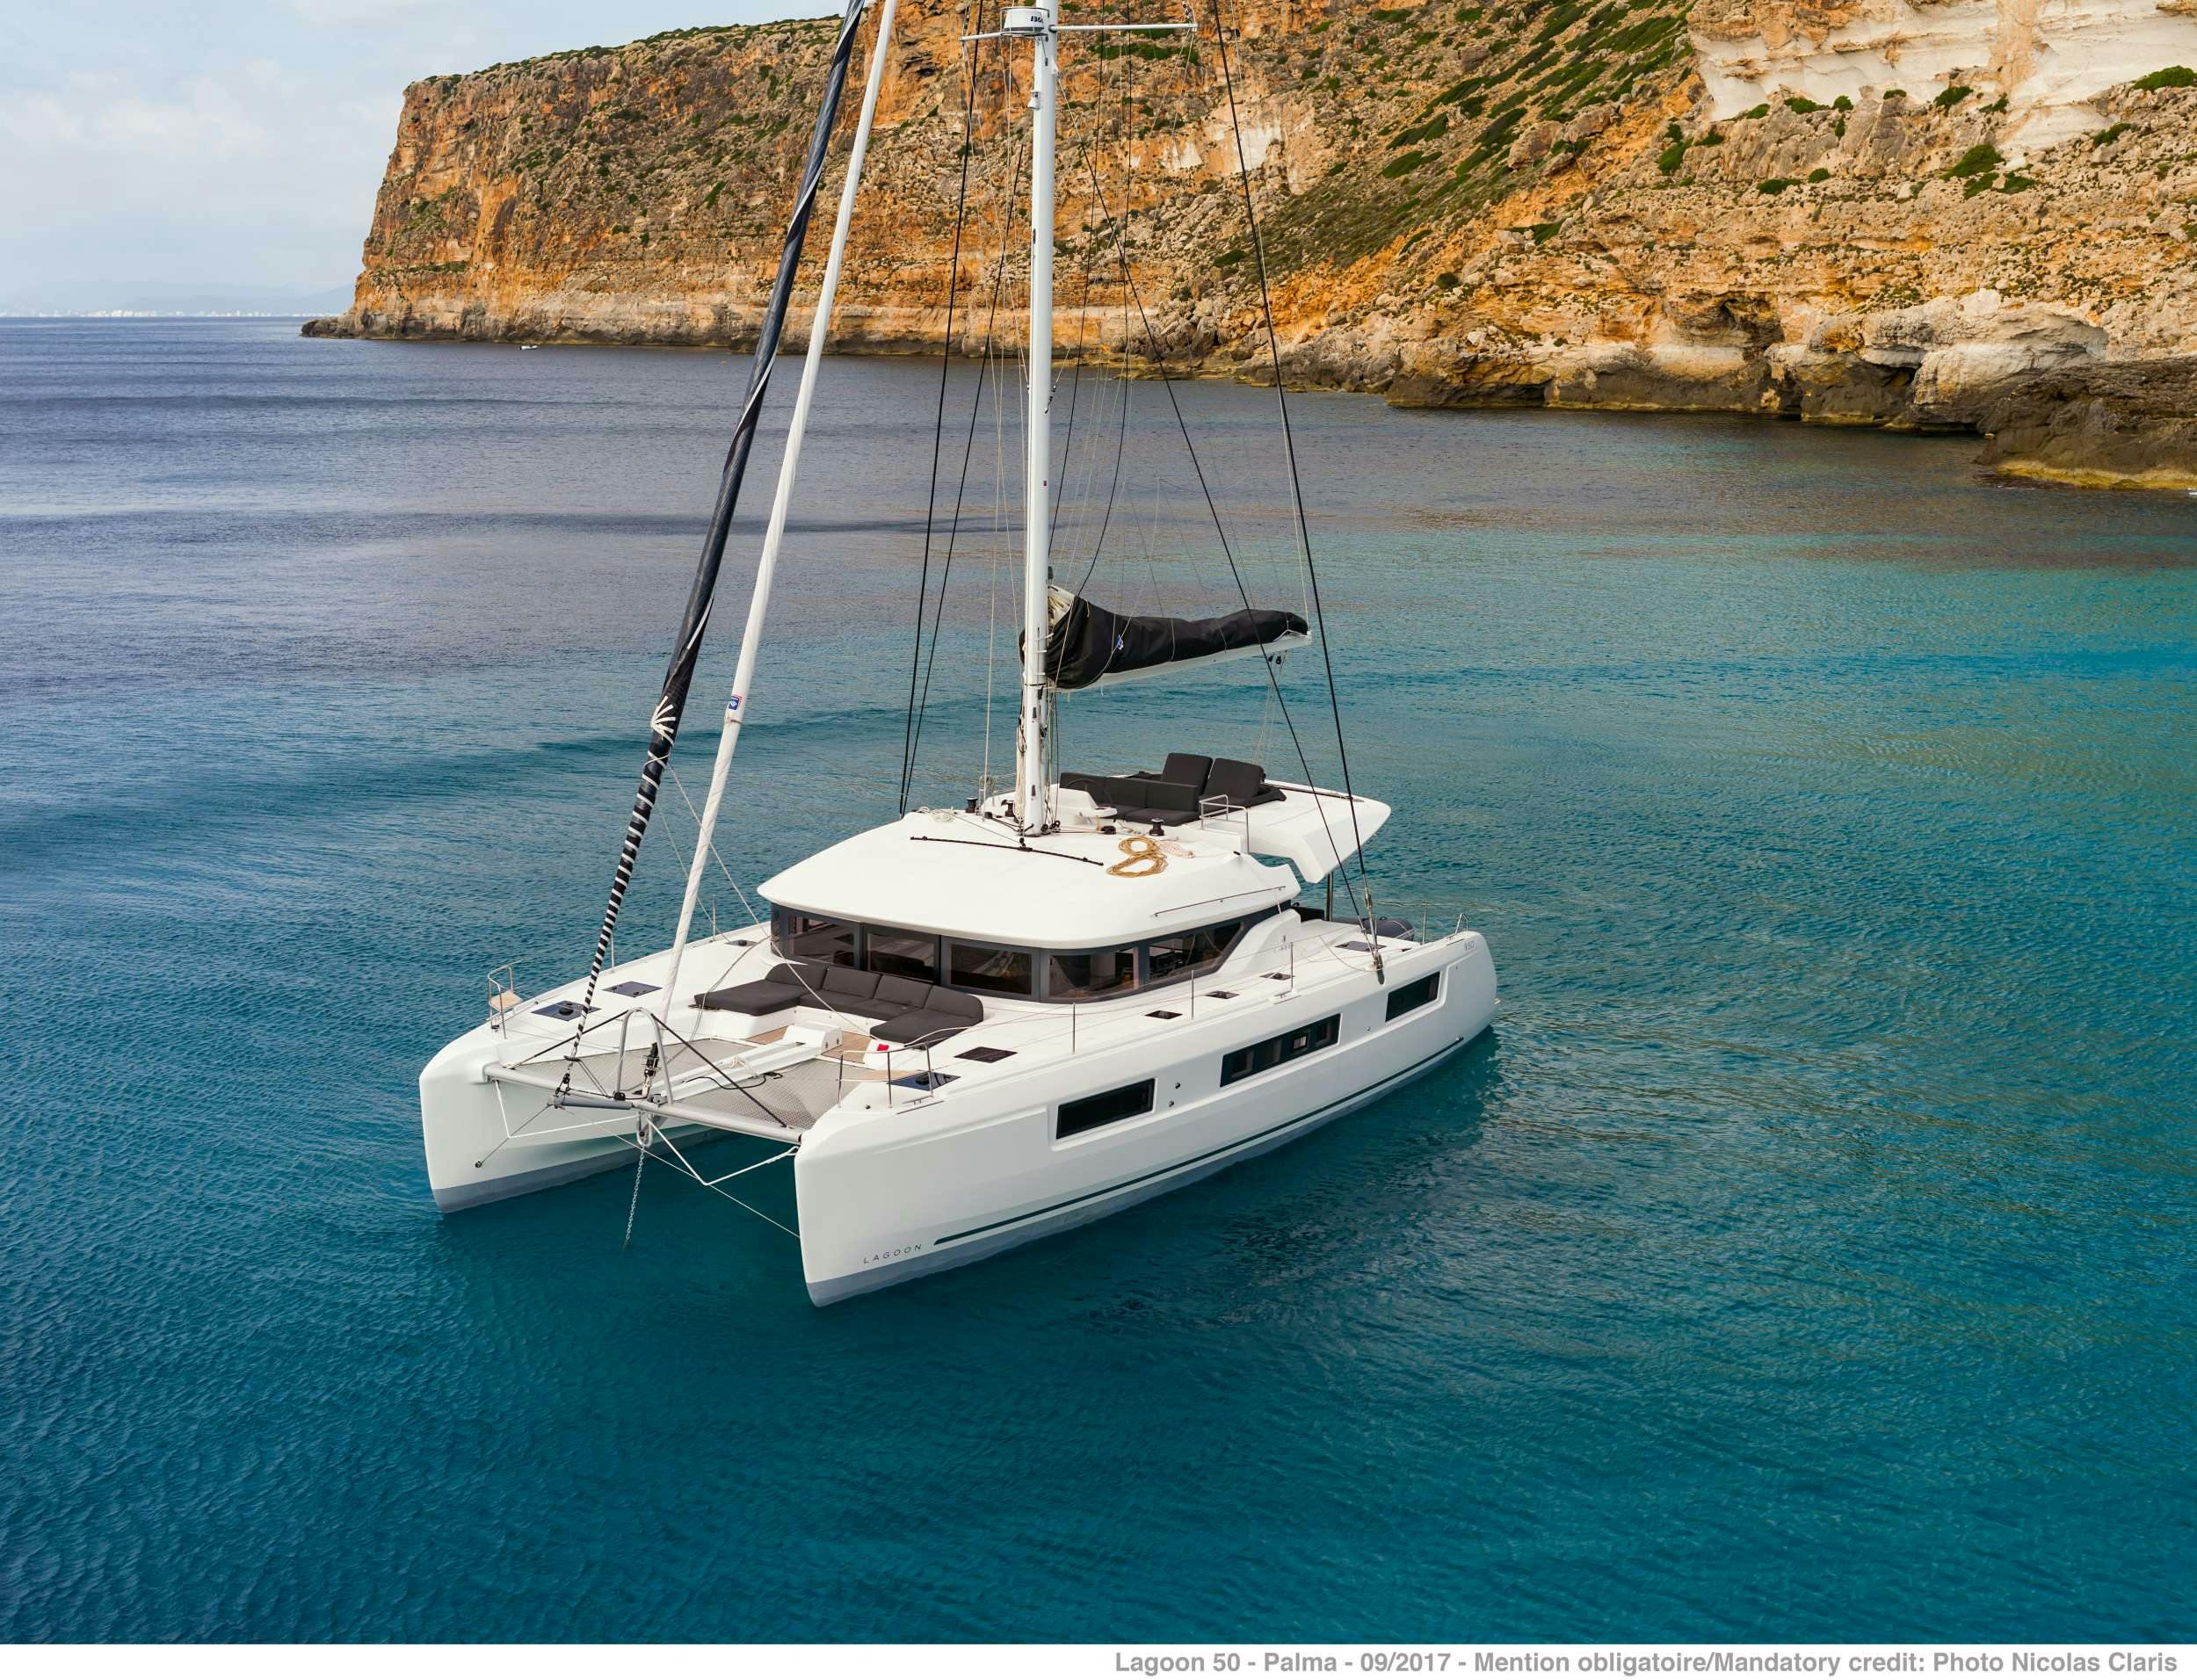 ONEIDA 2 - Alimos Yacht Charter & Boat hire in Greece 1